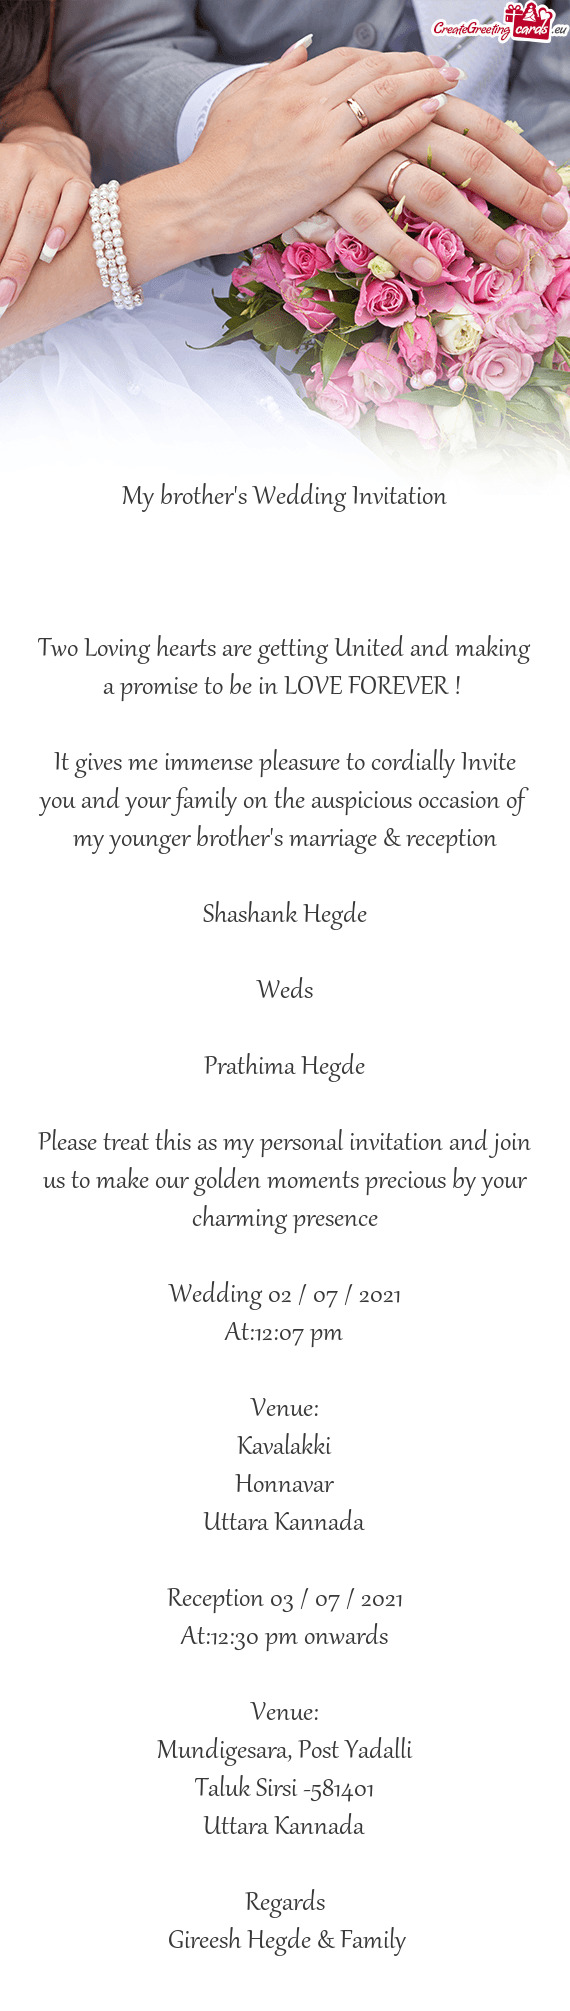 Prathima Hegde